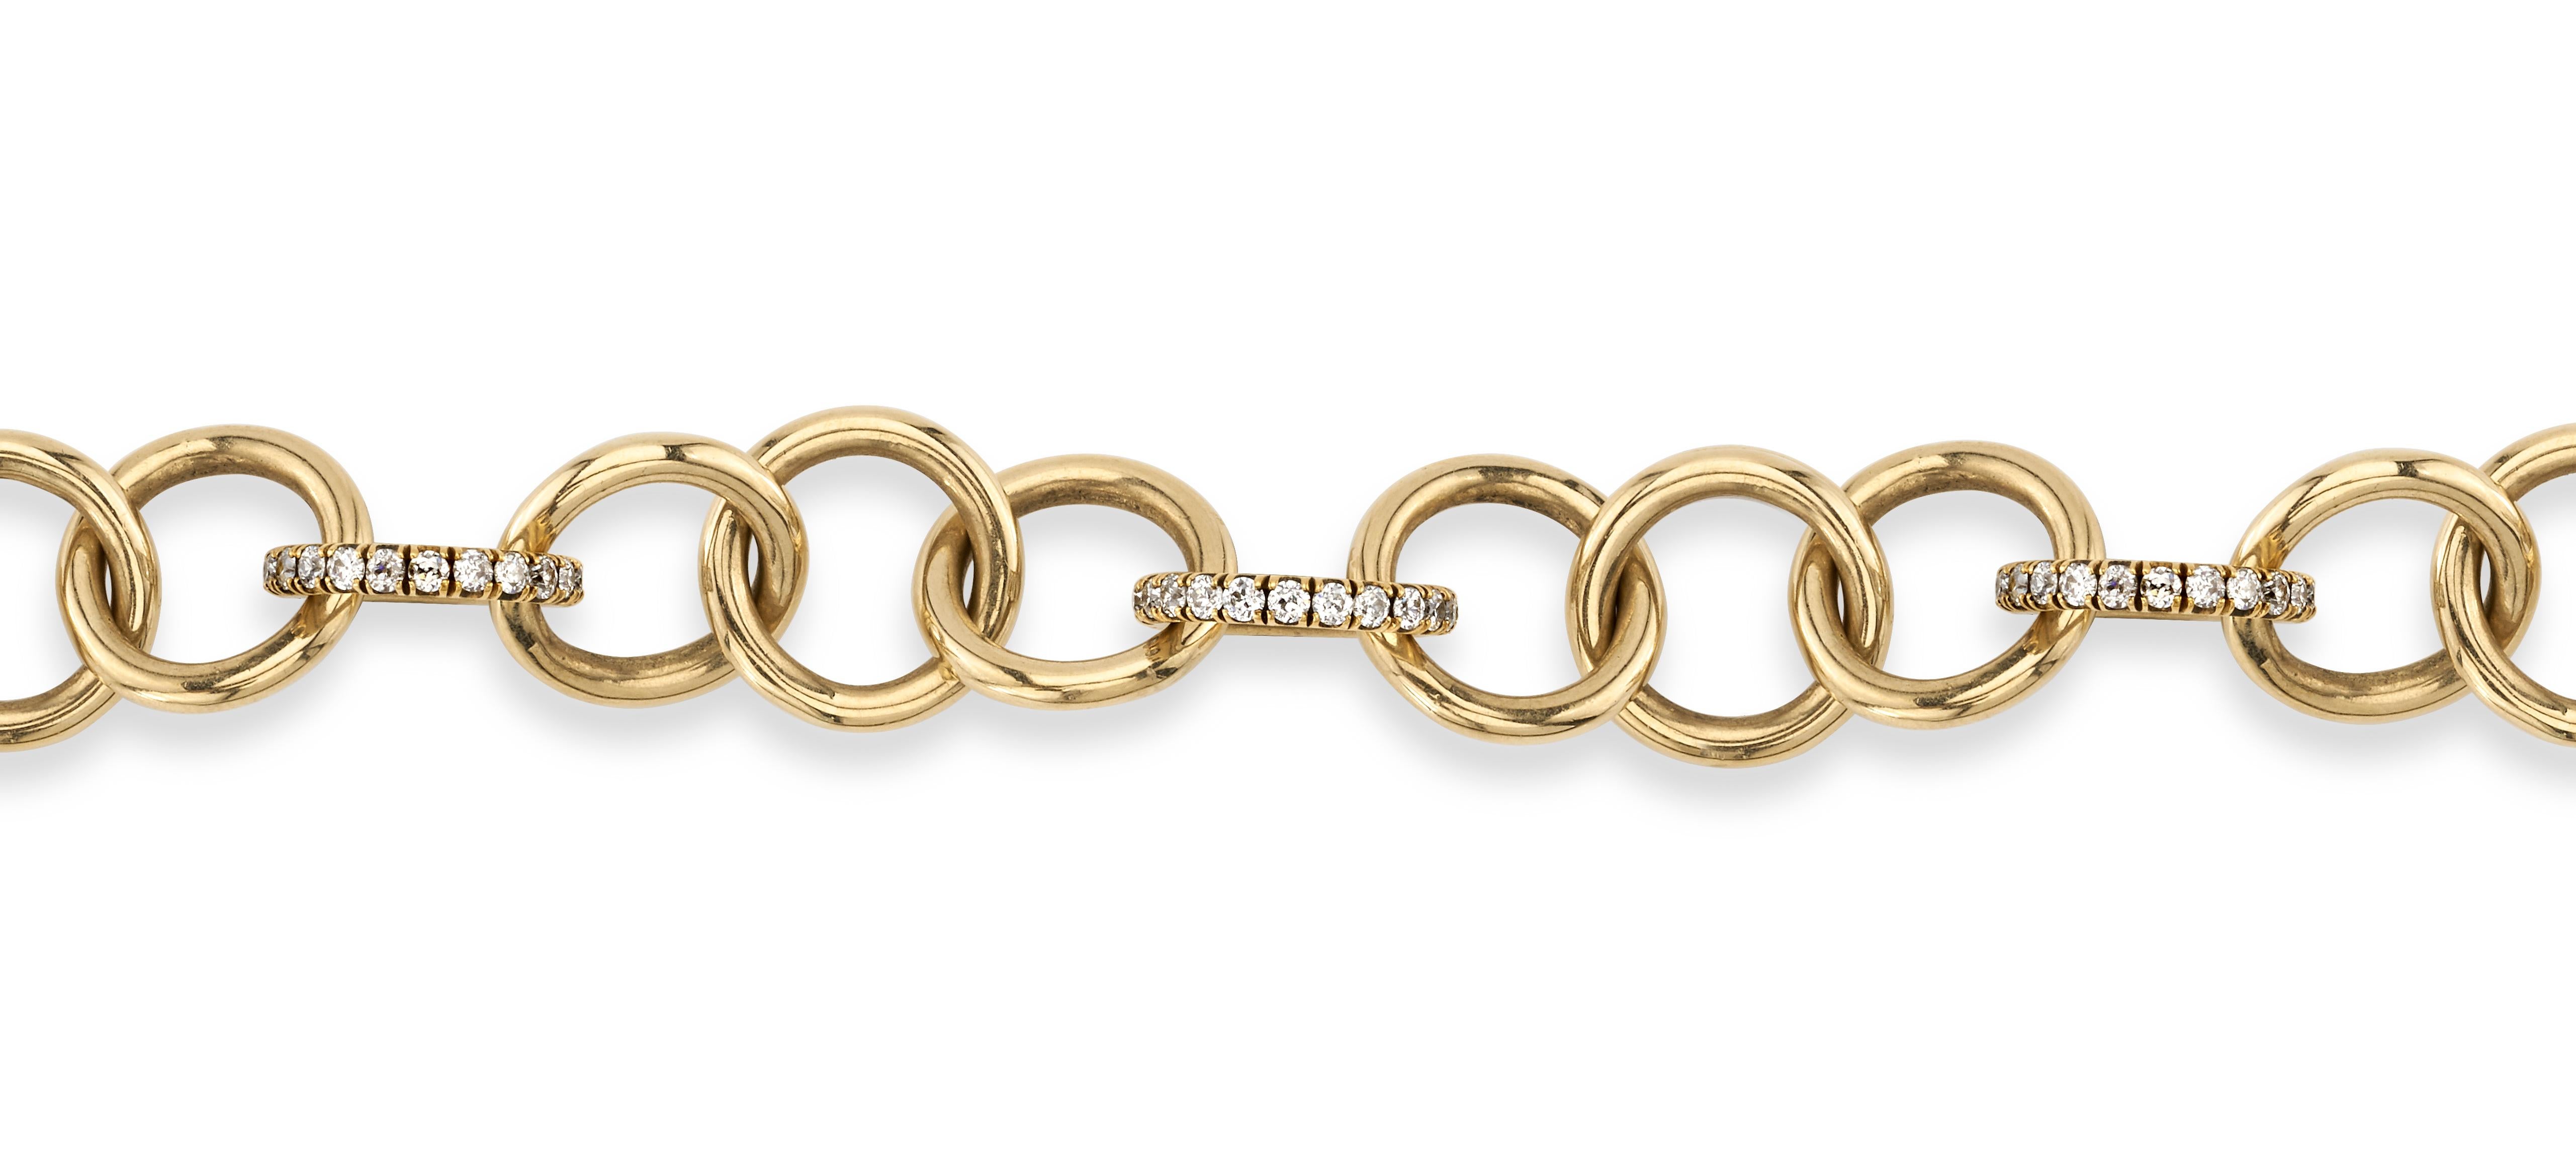 Handcrafted 18K yellow gold club bracelet with 1.62tw Old European cut diamonds. Bracelet measures 7.5